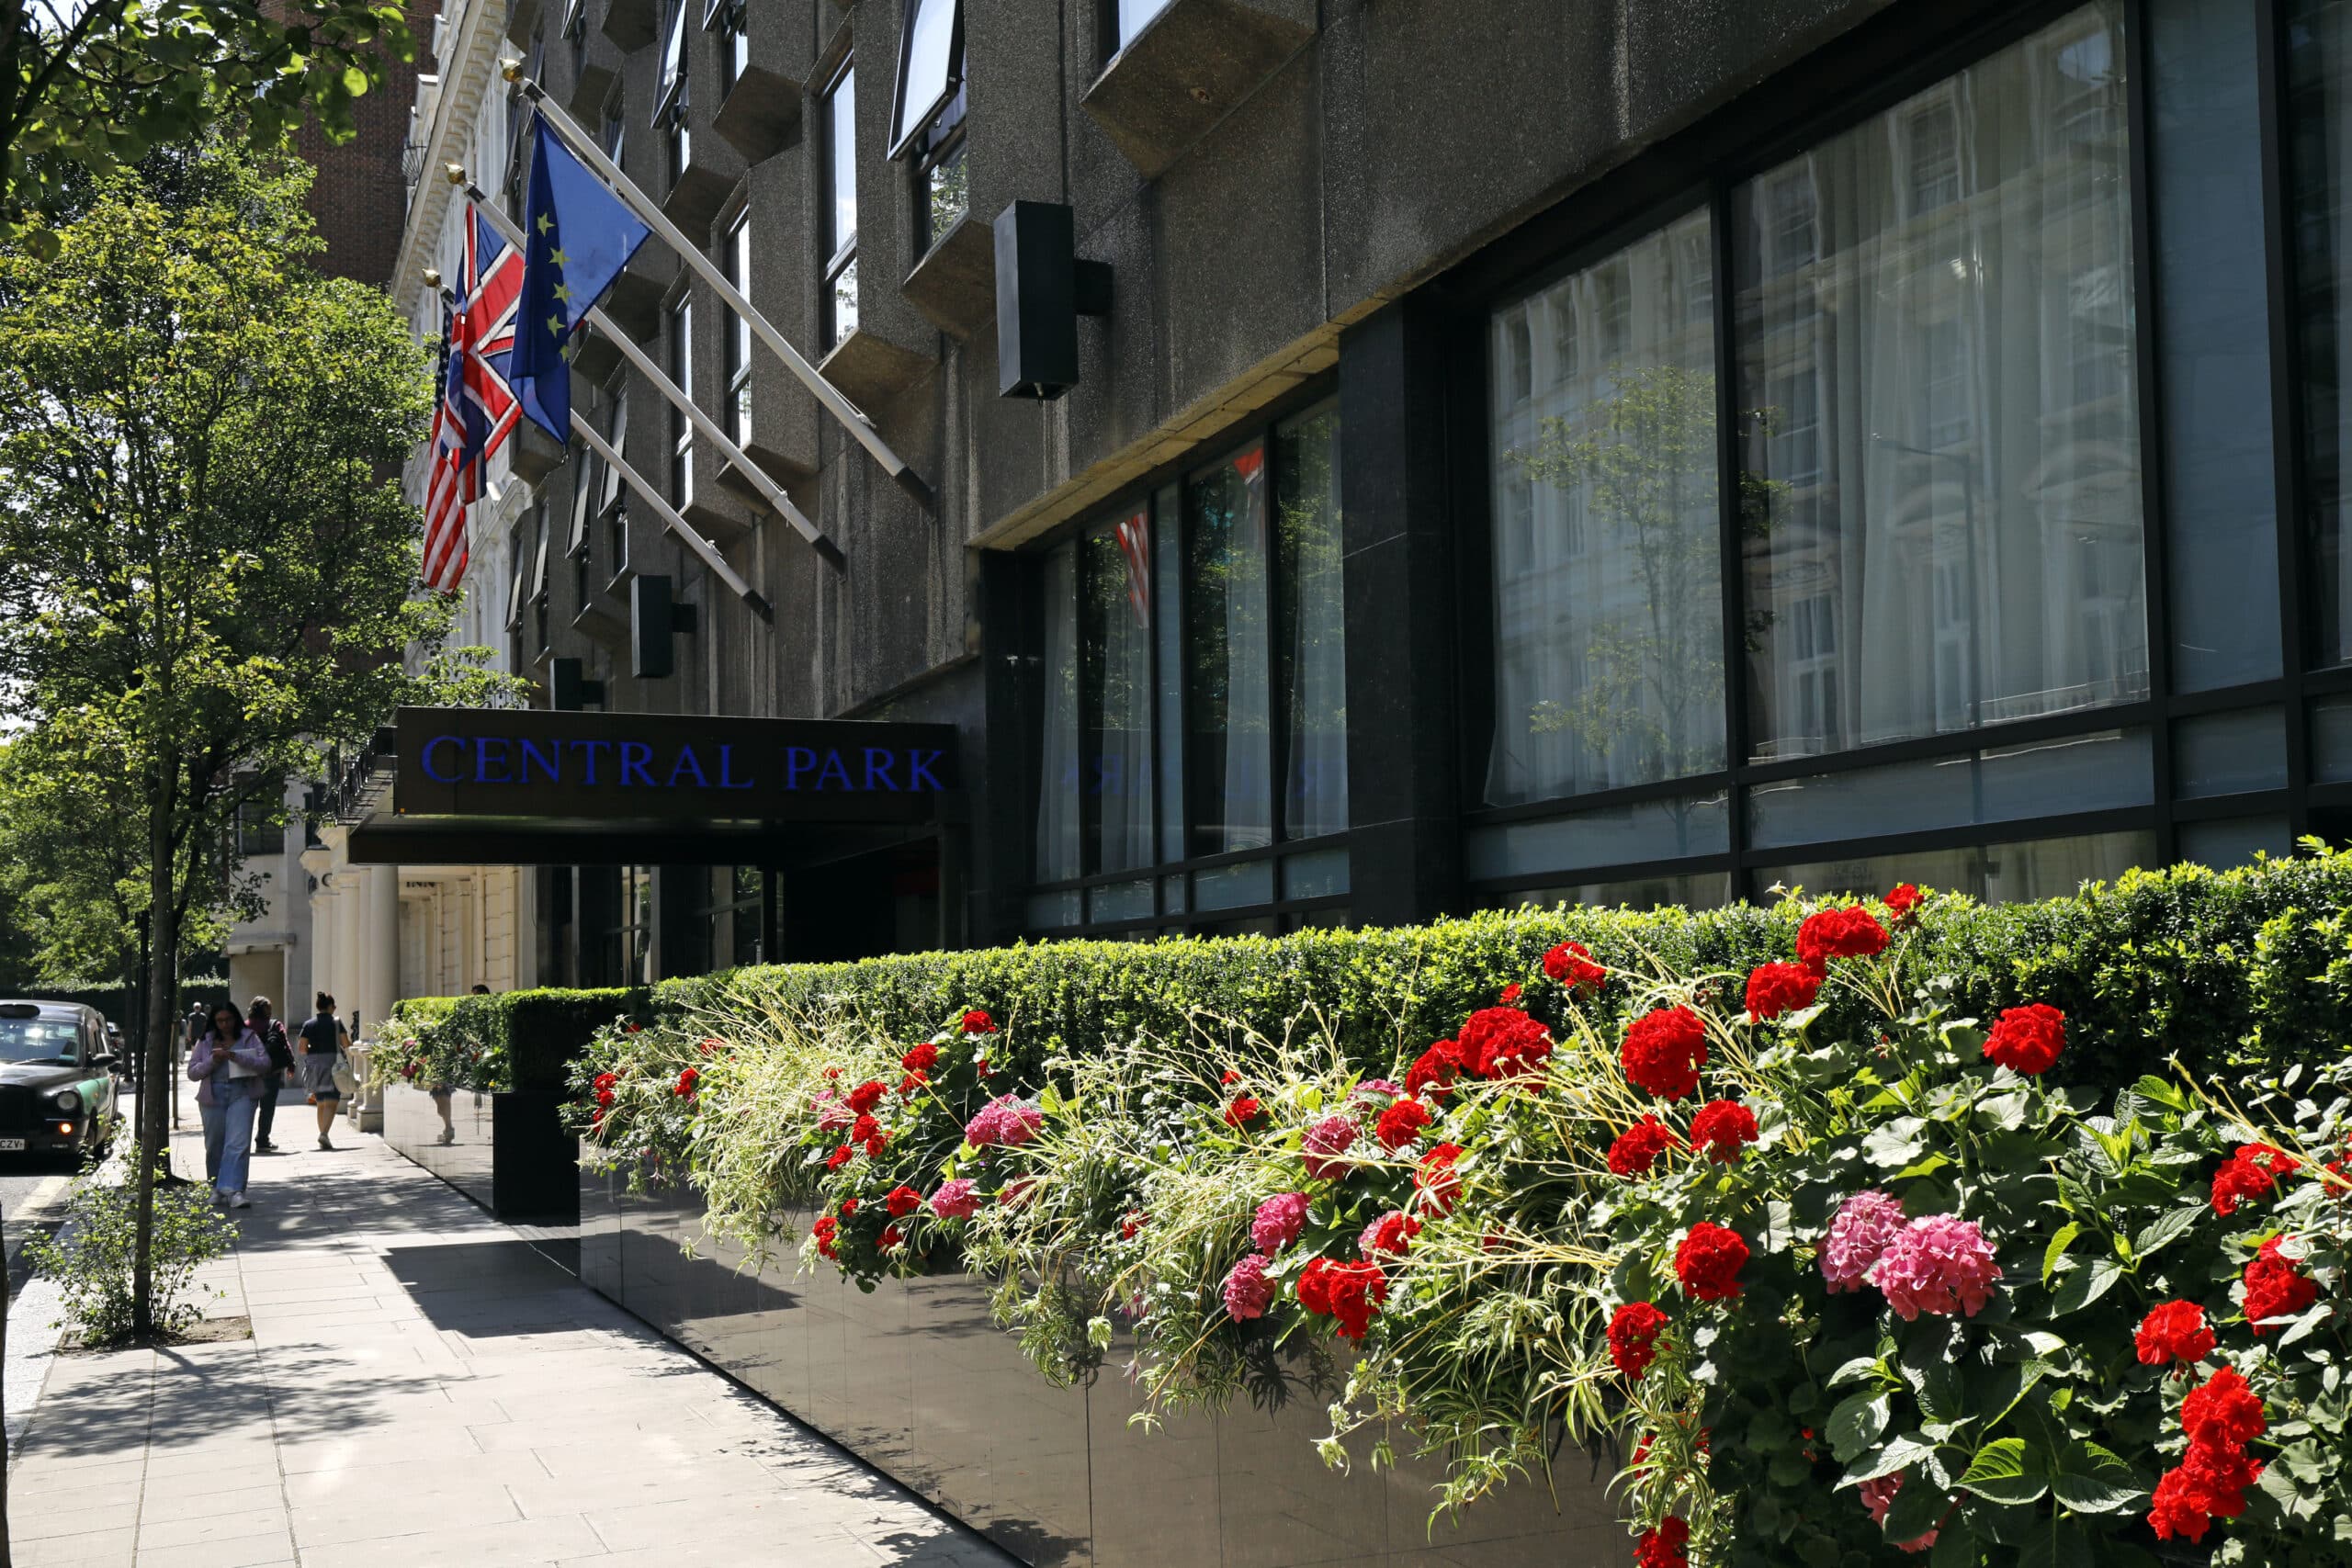 Central Park Hotel - Entrance flowers